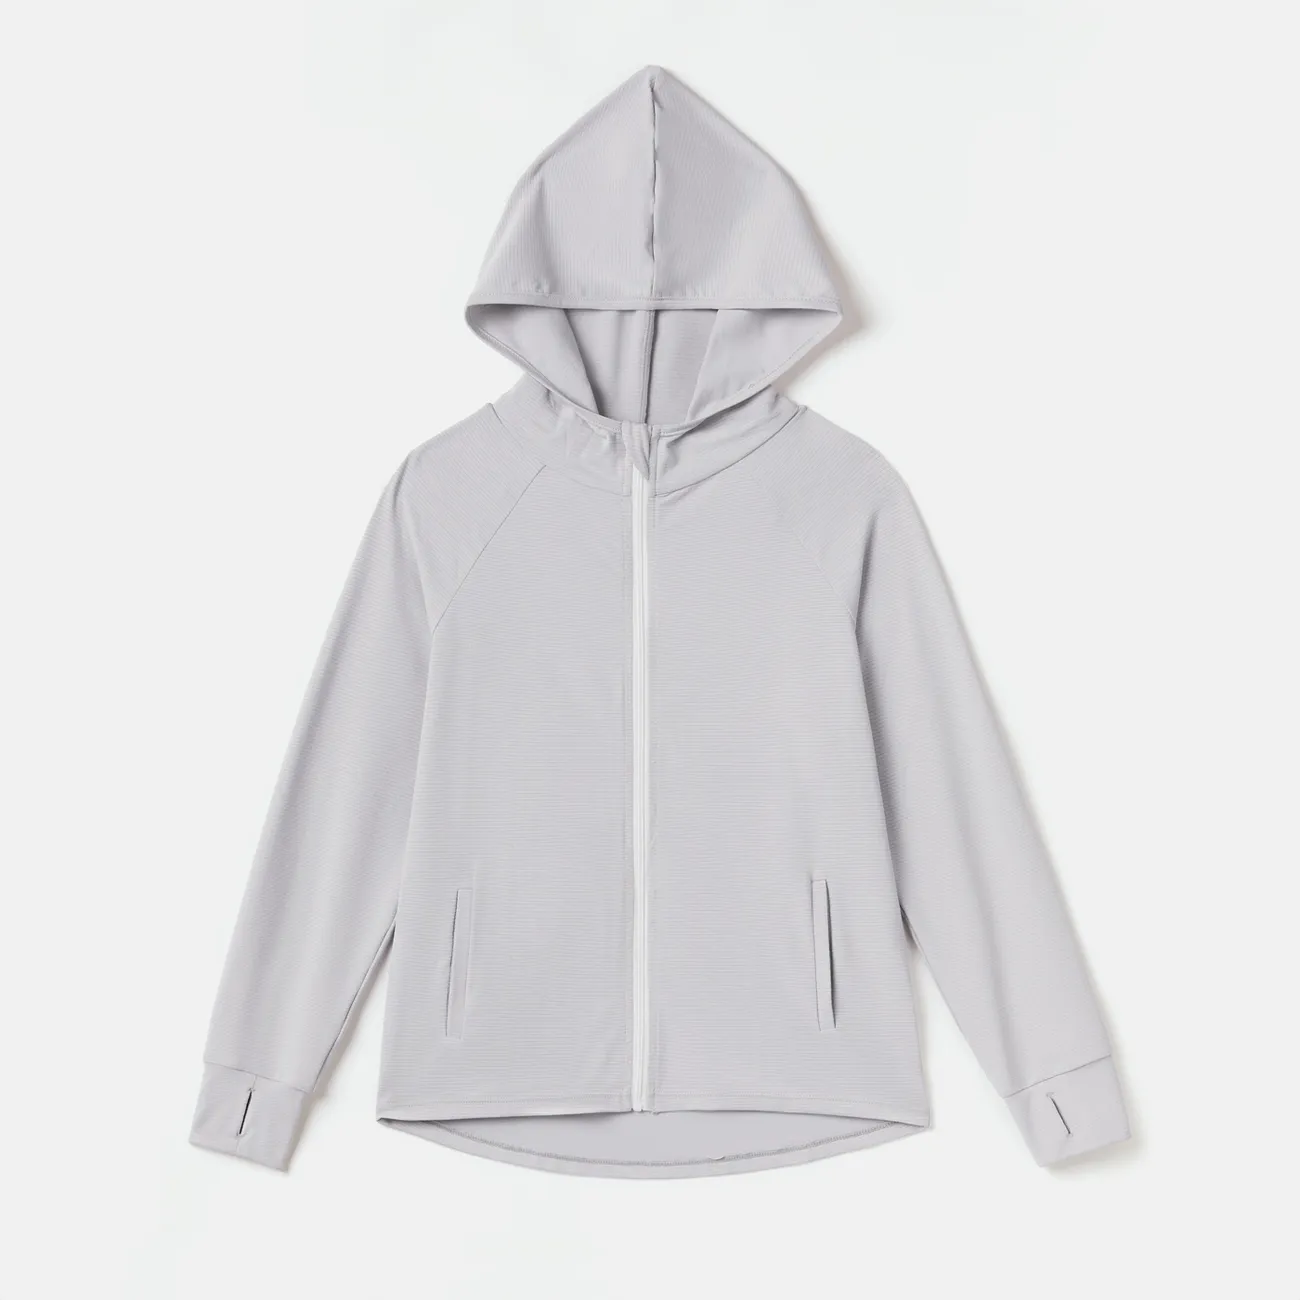 Activewear Anti-UV Kid Boy/Kid Girl Solid Color Sun Protection Zipper Hooded Jacket Grey big image 1